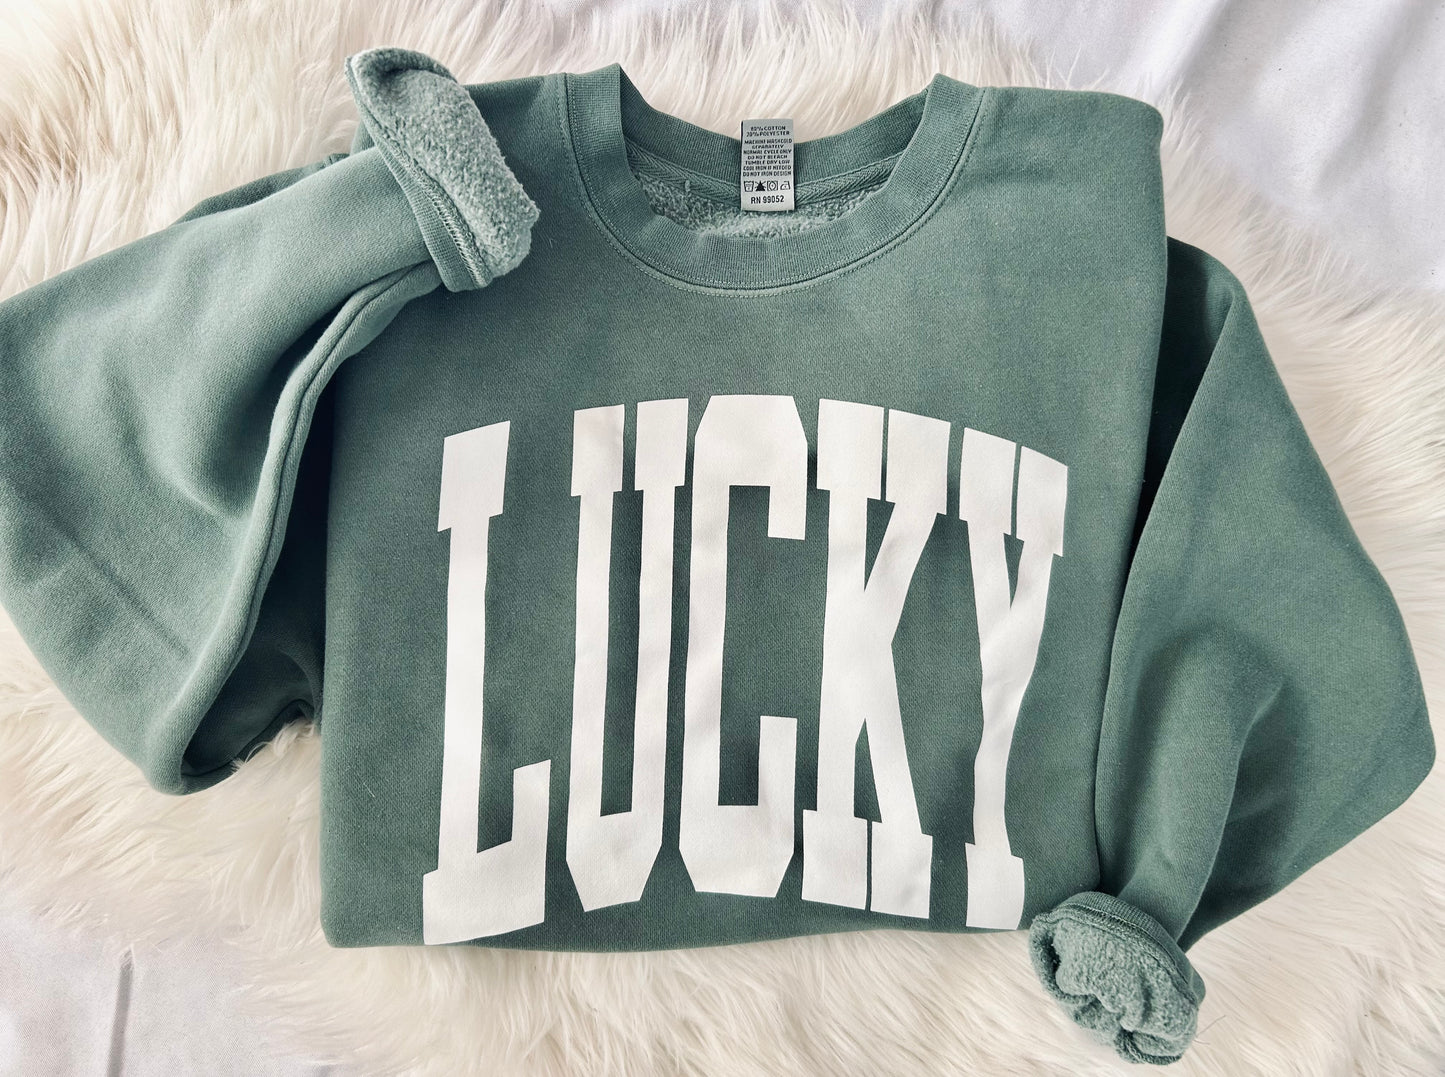 Lucky Arch Vintage Adult Sweatshirt